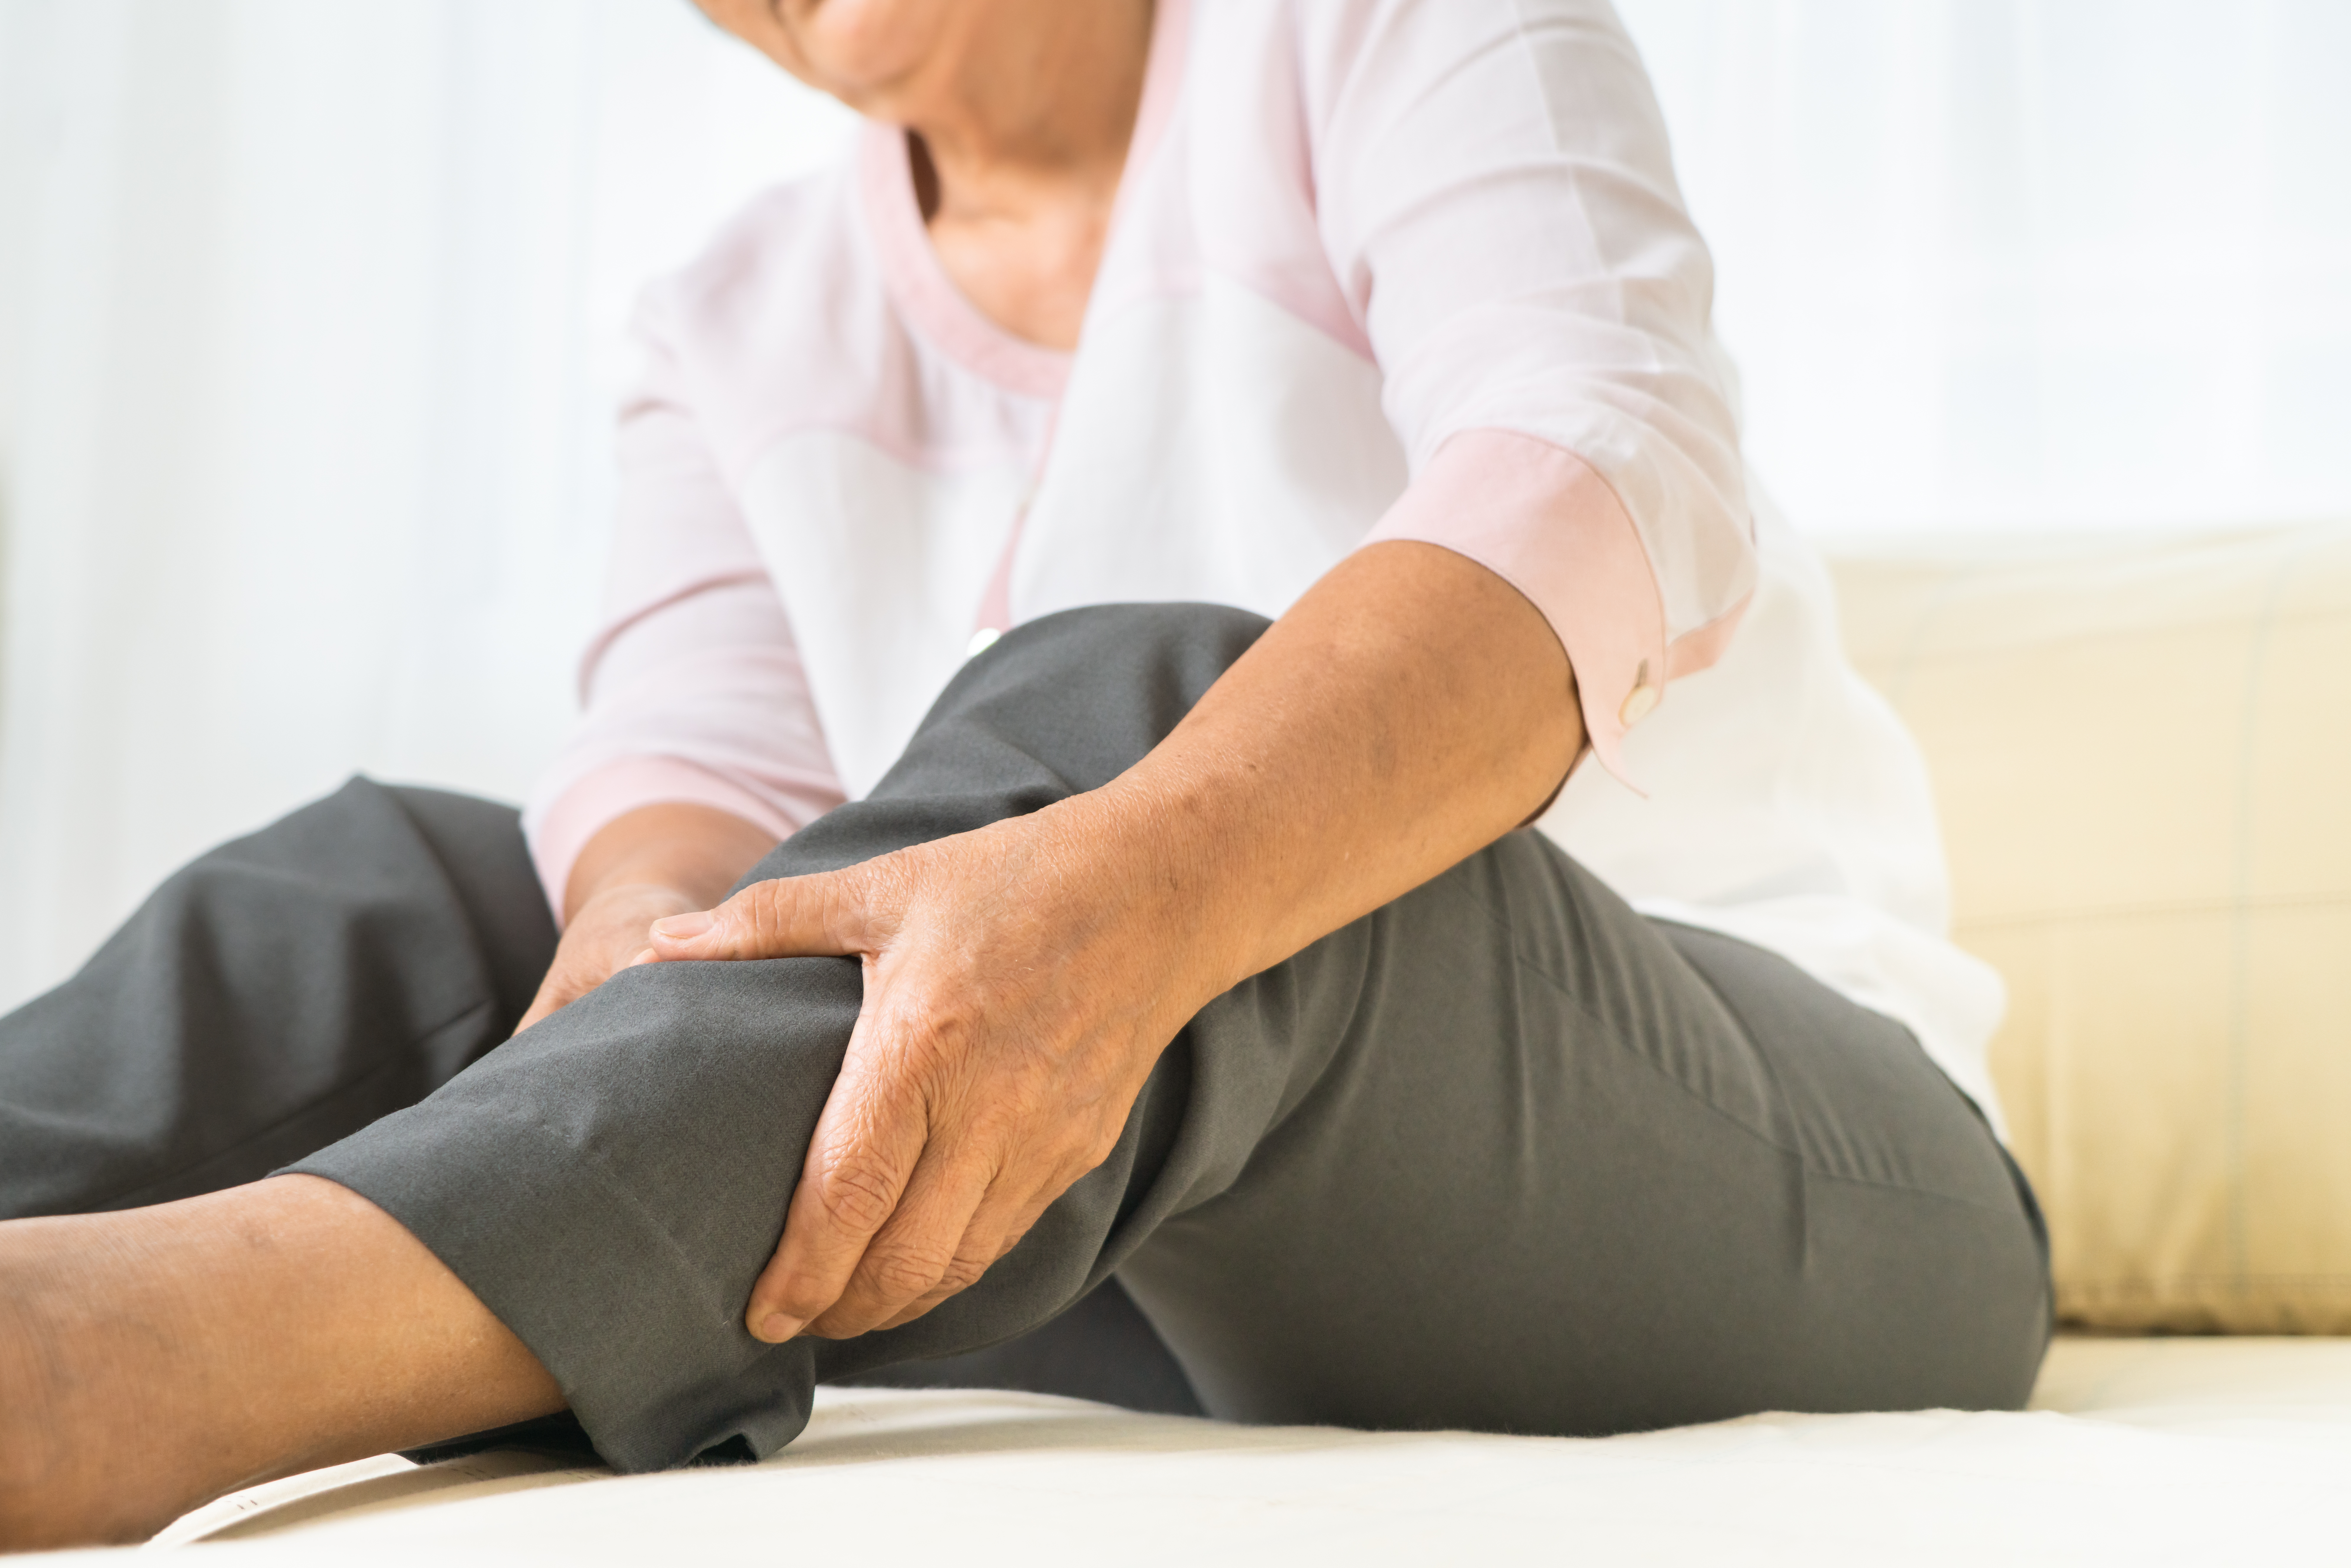 Elderly women rubs her leg in pain